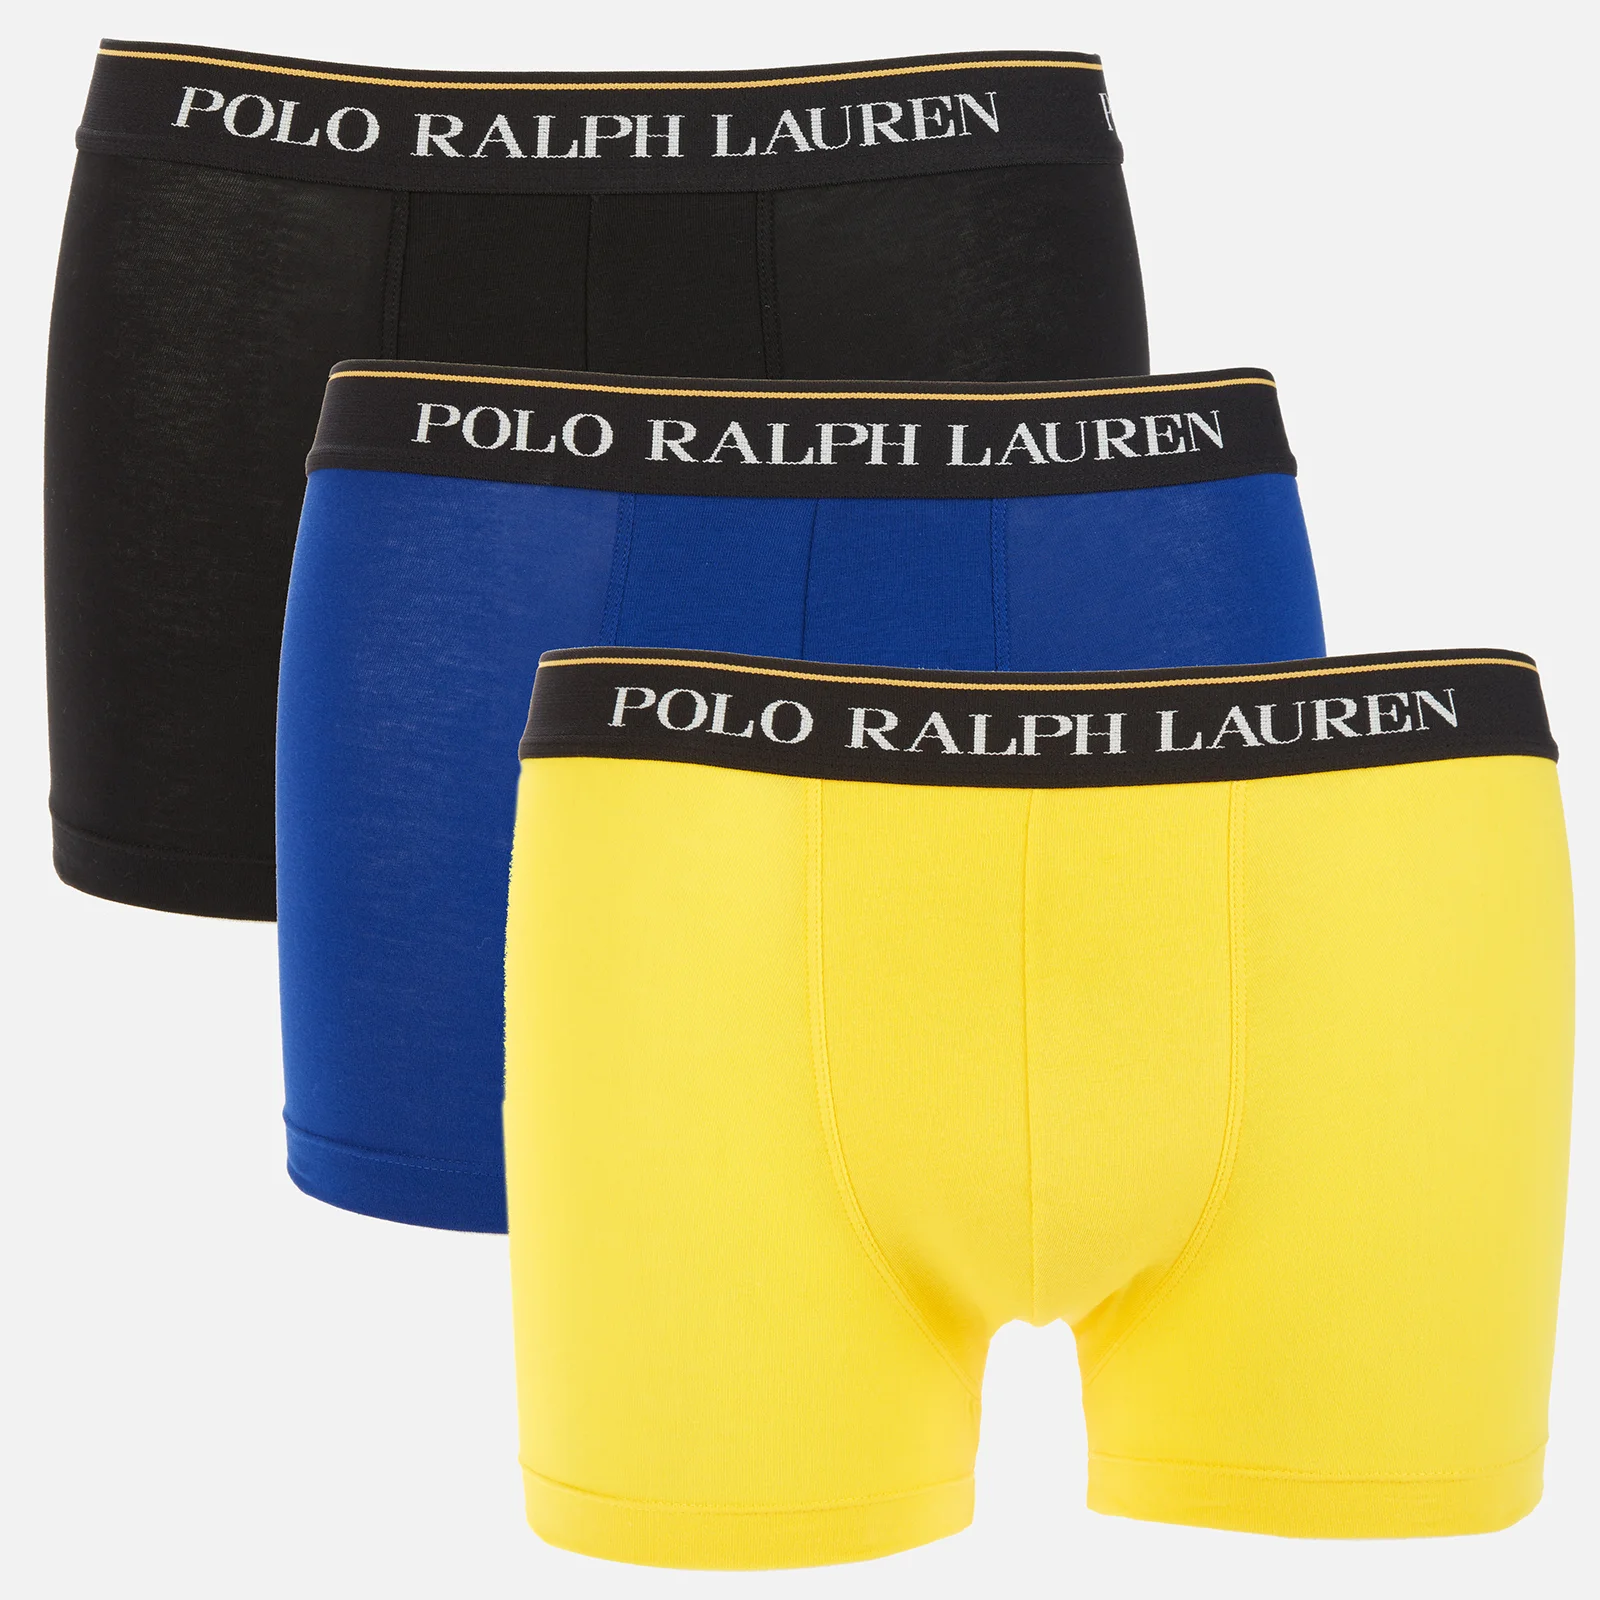 Polo Ralph Lauren Men's 3-Pack Classic Trunk Boxer Shorts - Black/Yellow/Royal Image 1